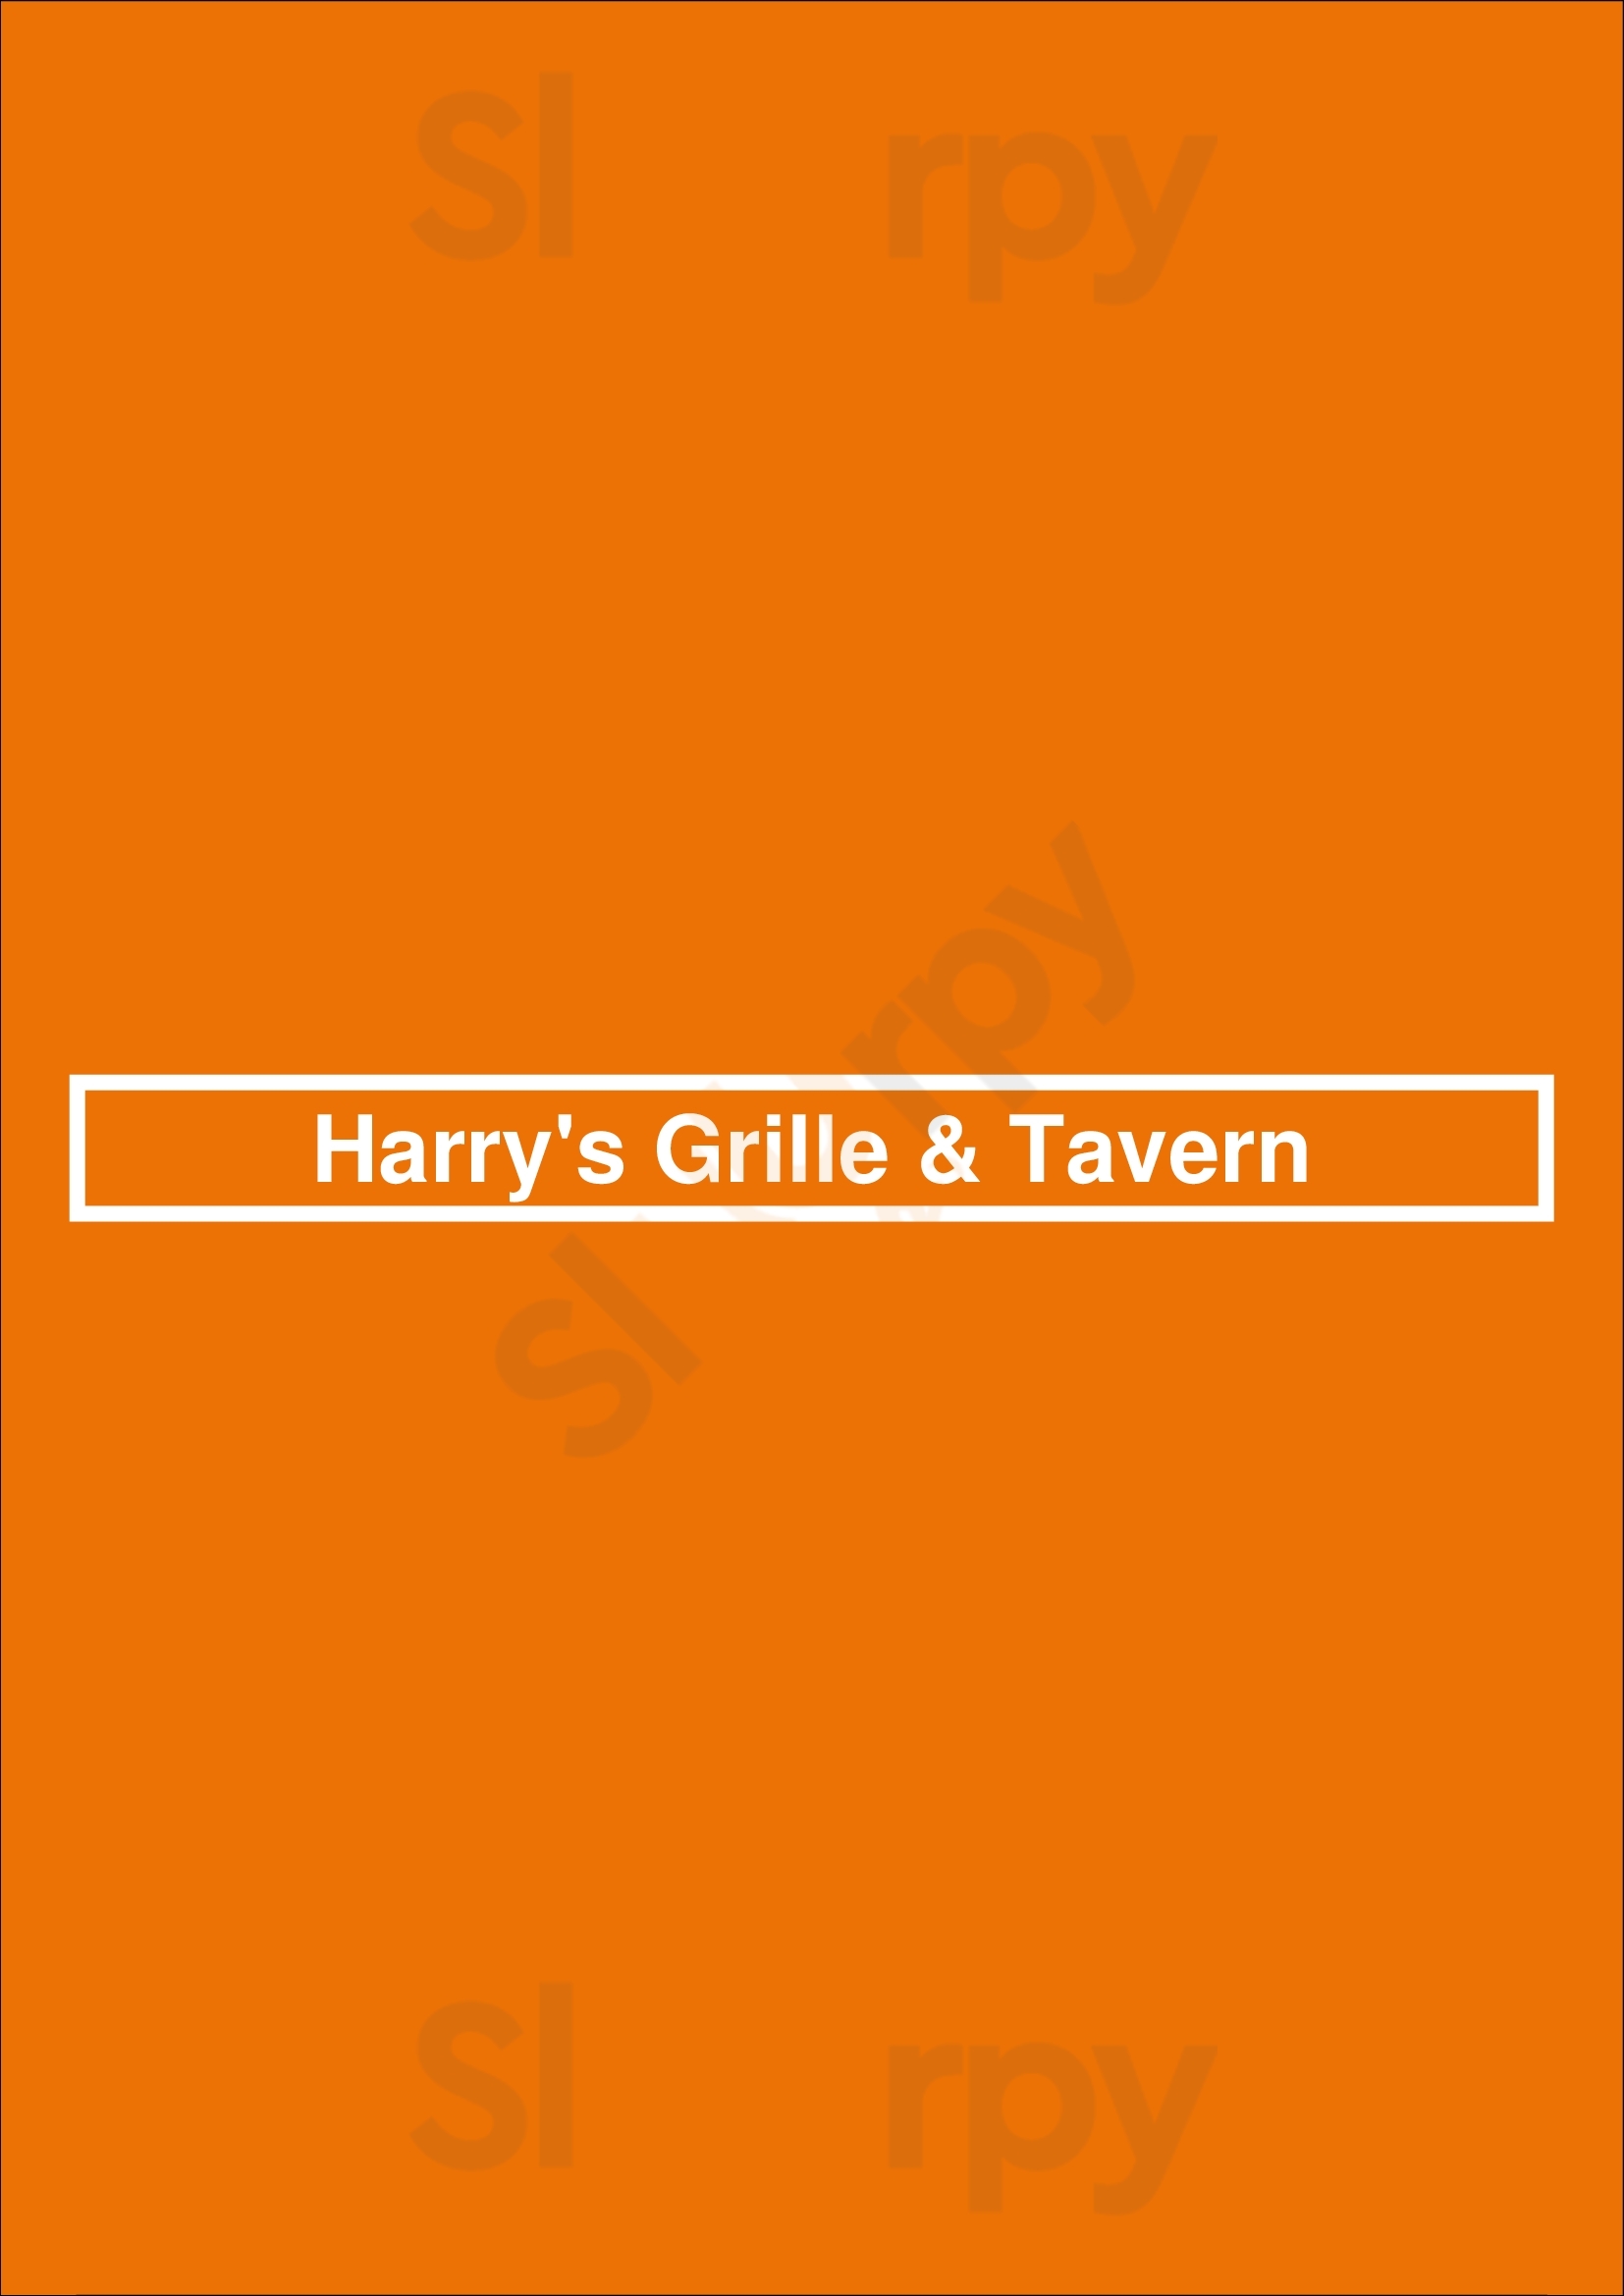 Harry's Grille & Tavern Charlotte Menu - 1